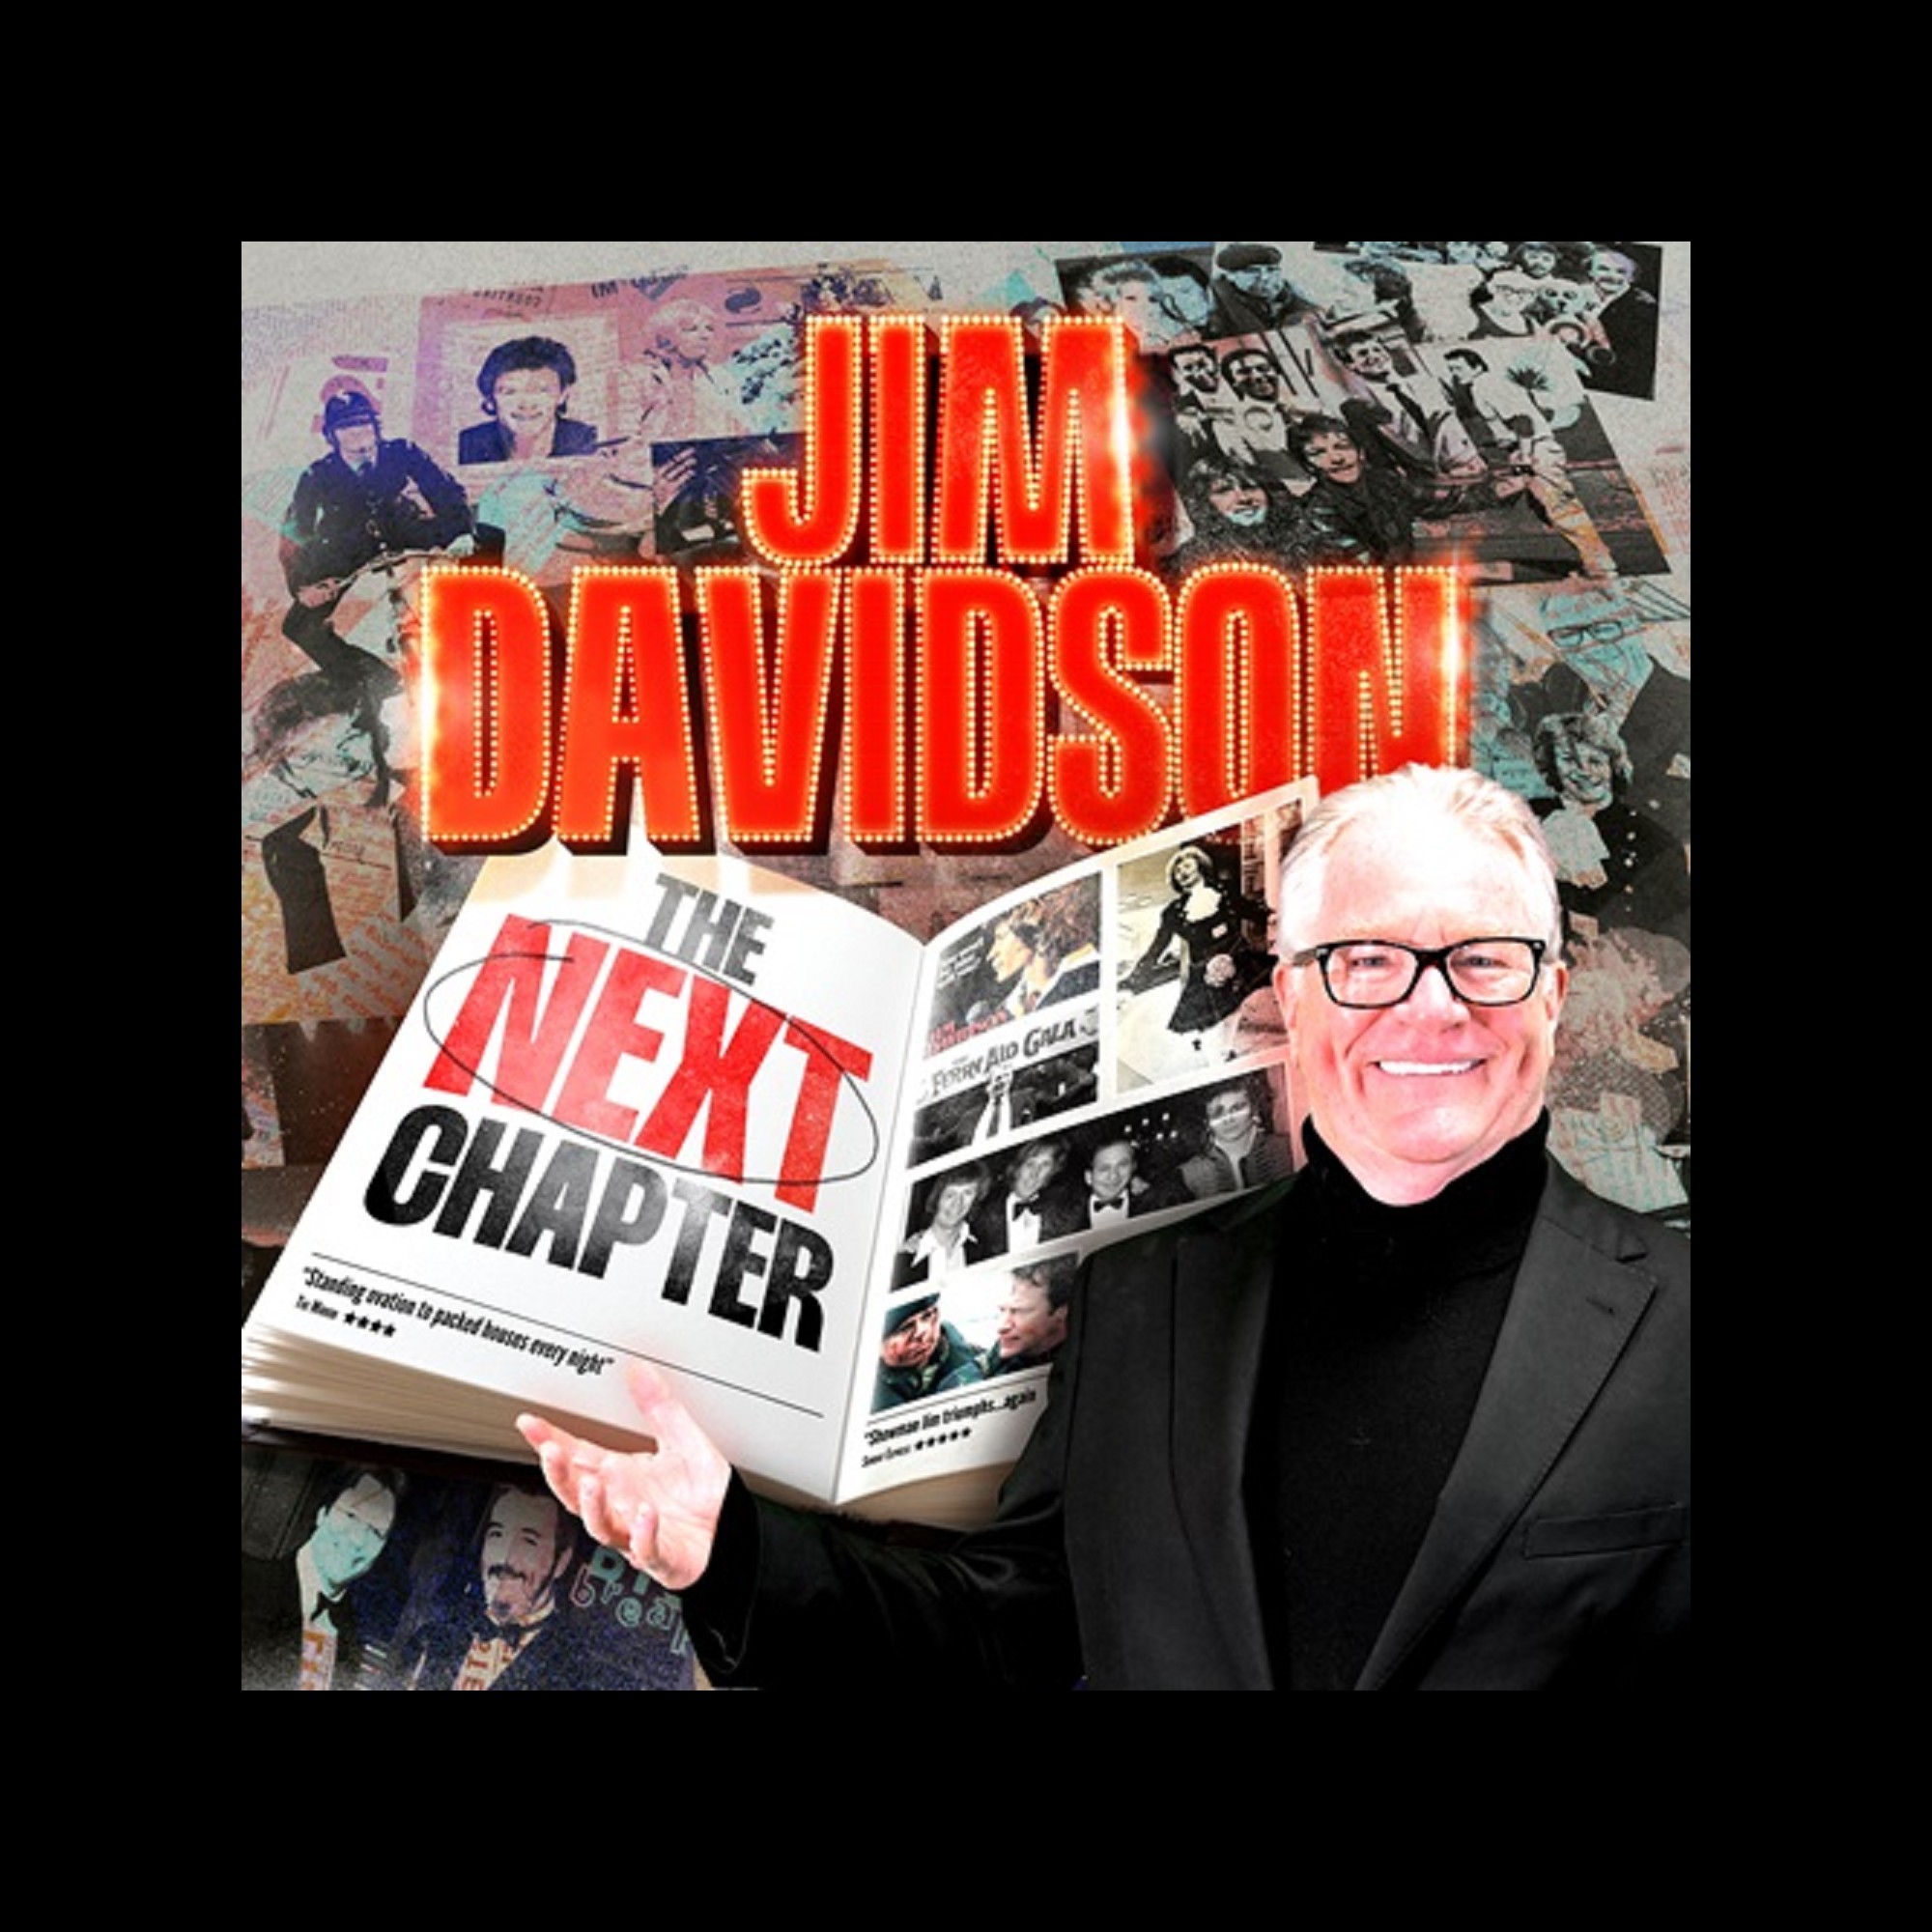 Jim Davidson - The Next Chapter